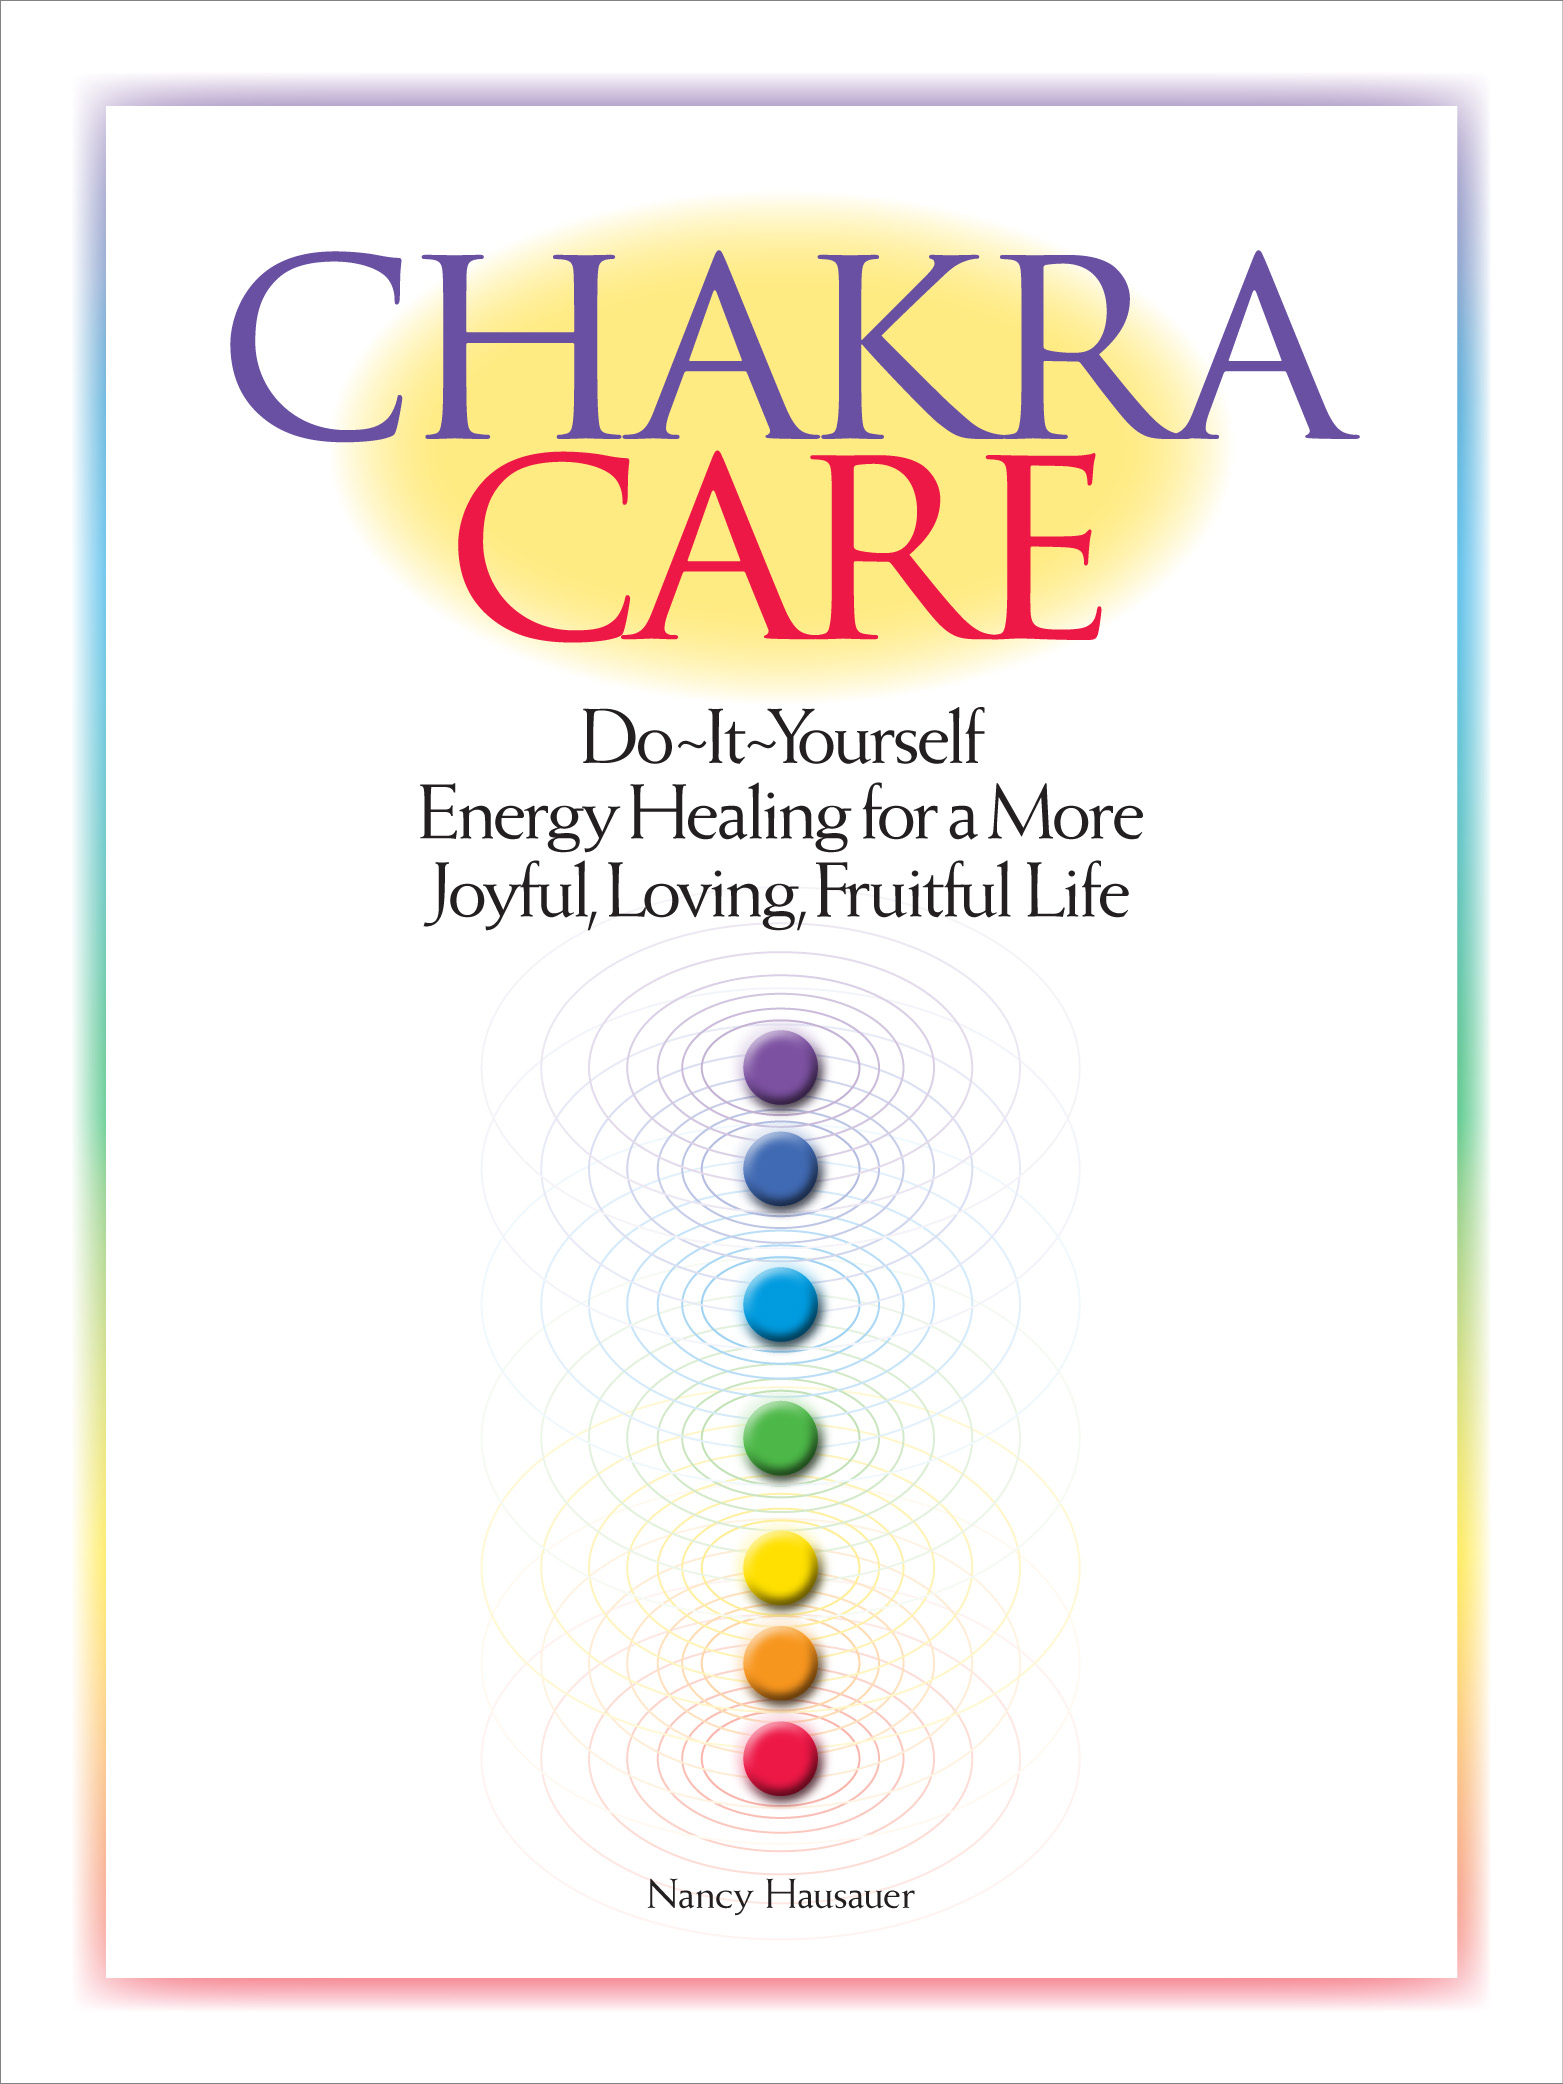 Chakra Care by Nancy Hausauer